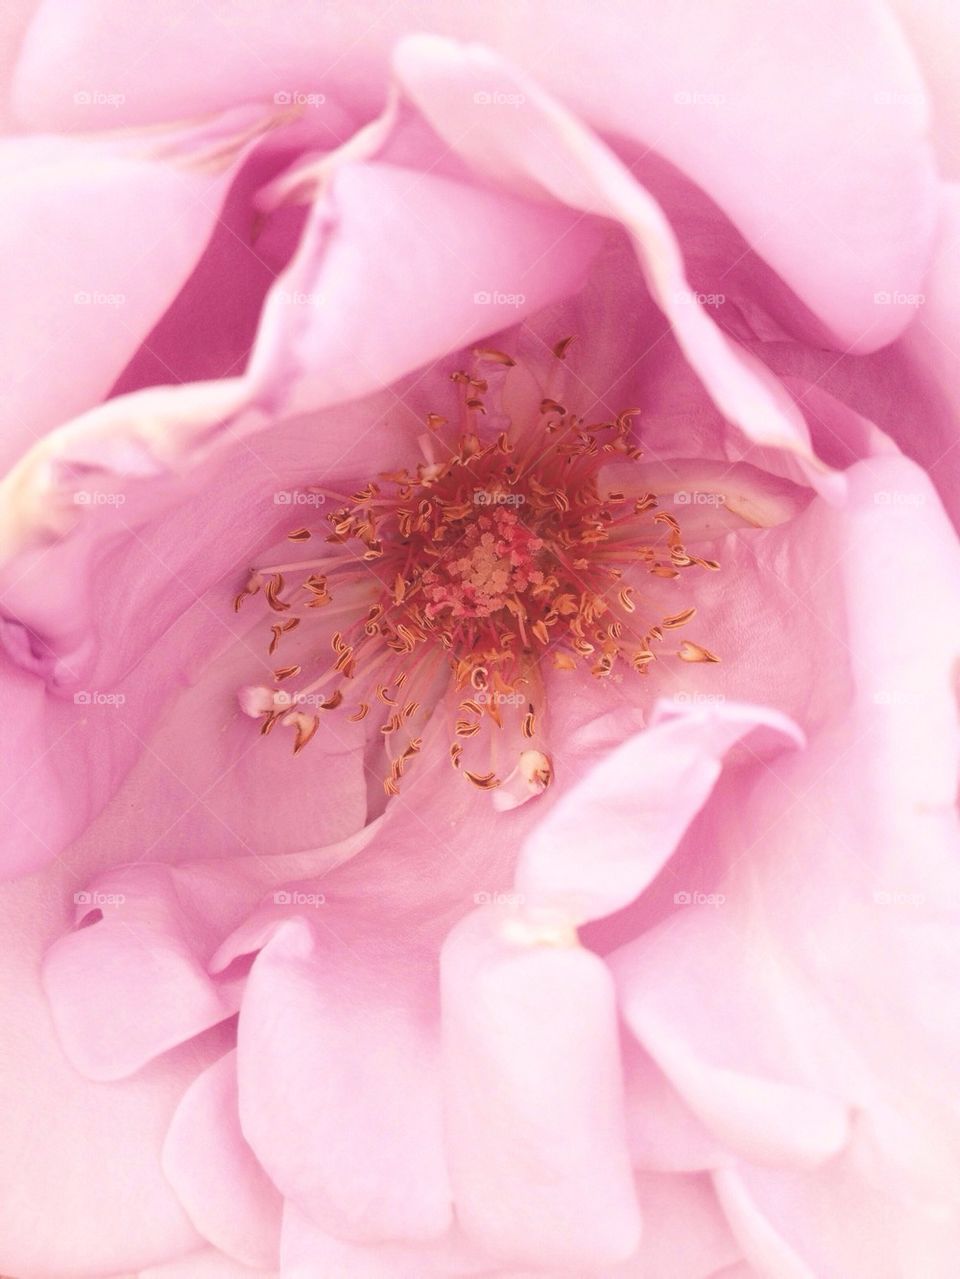 Pink Flower Close Up